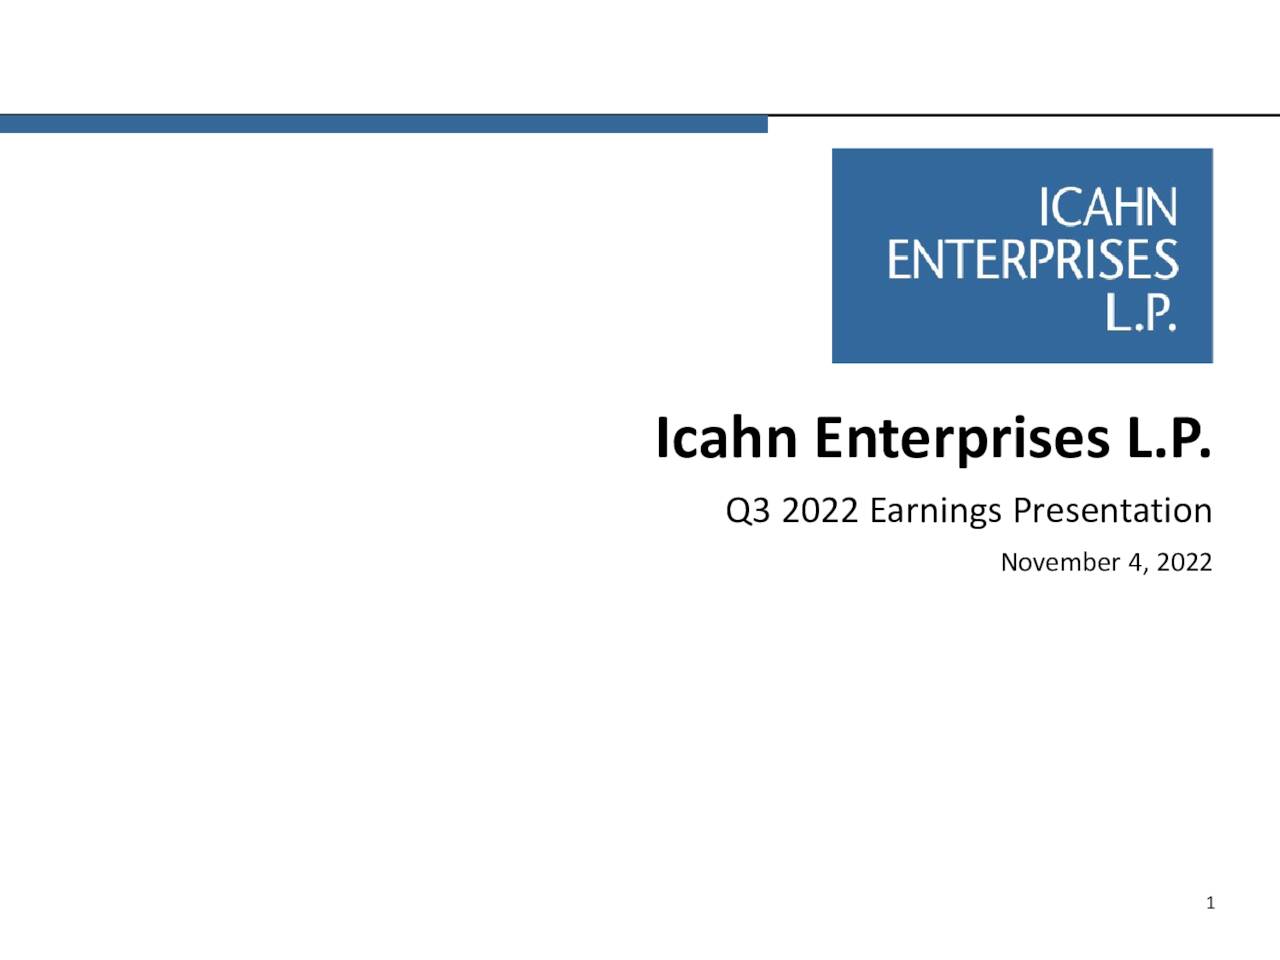 Icahn Enterprises L.P. 2022 Q3 Results Earnings Call Presentation